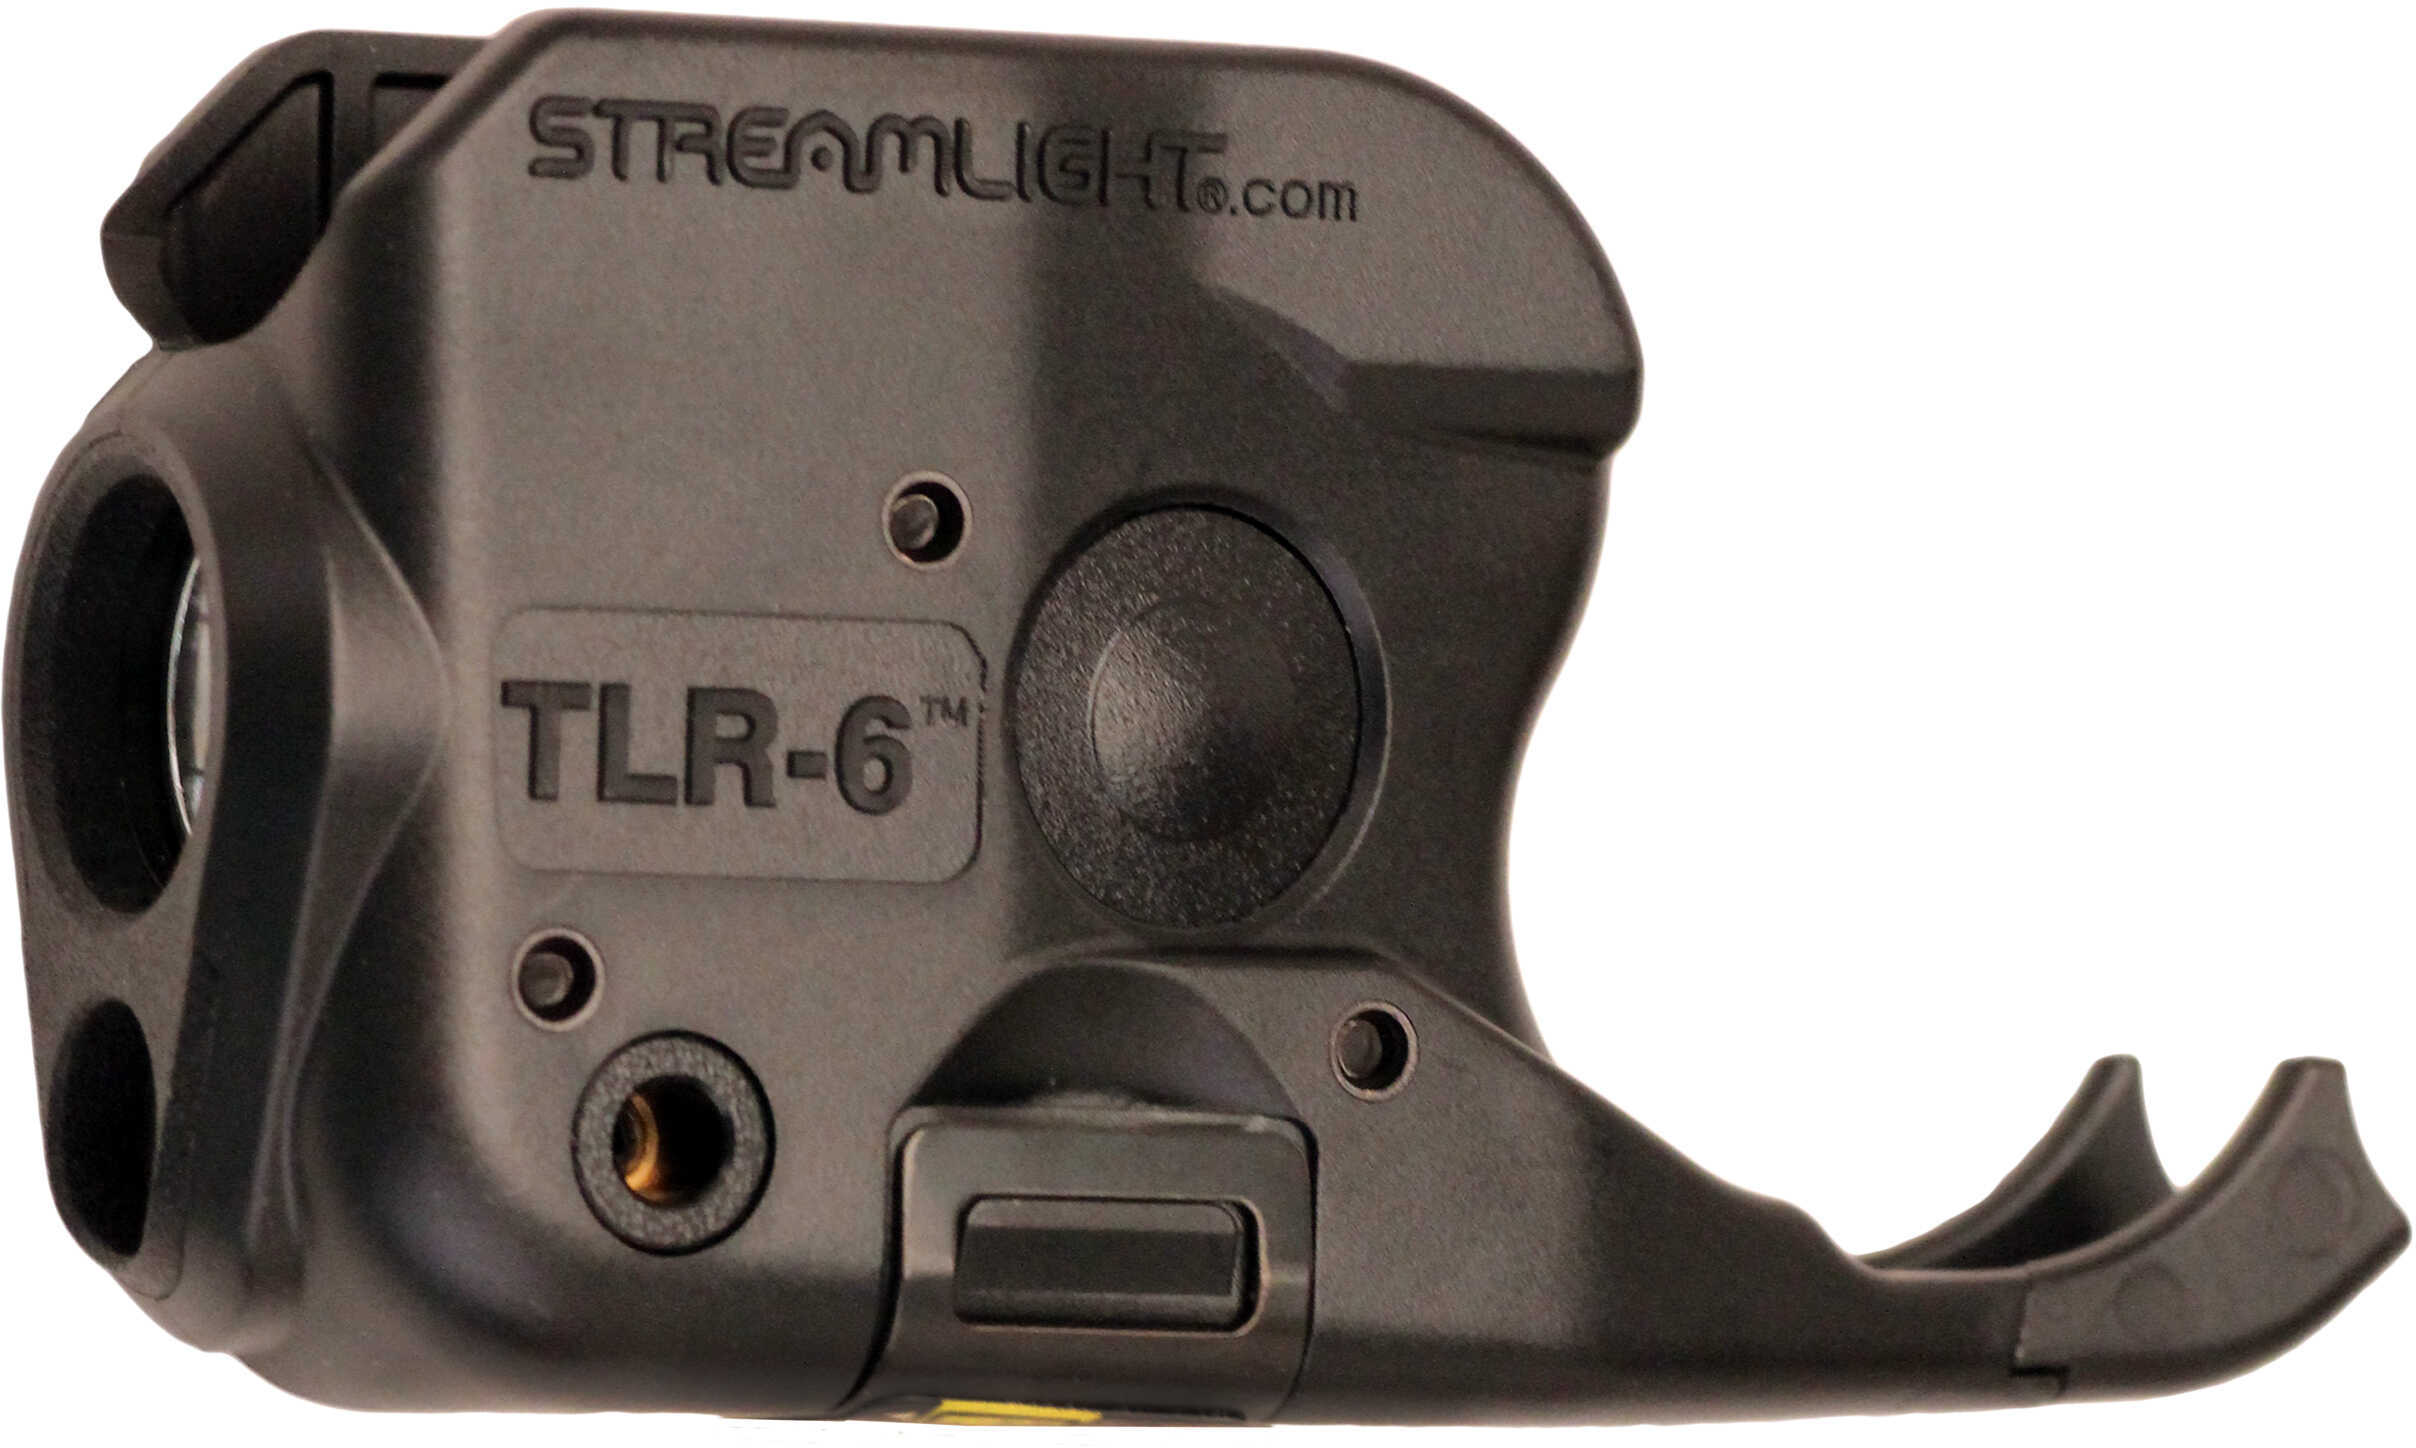 Streamlight TLR-6 Tac Light w/laser For SIG P238/P938 White LED and Red Laser Includes 2 CR 1/3N Lithium Batteries Black